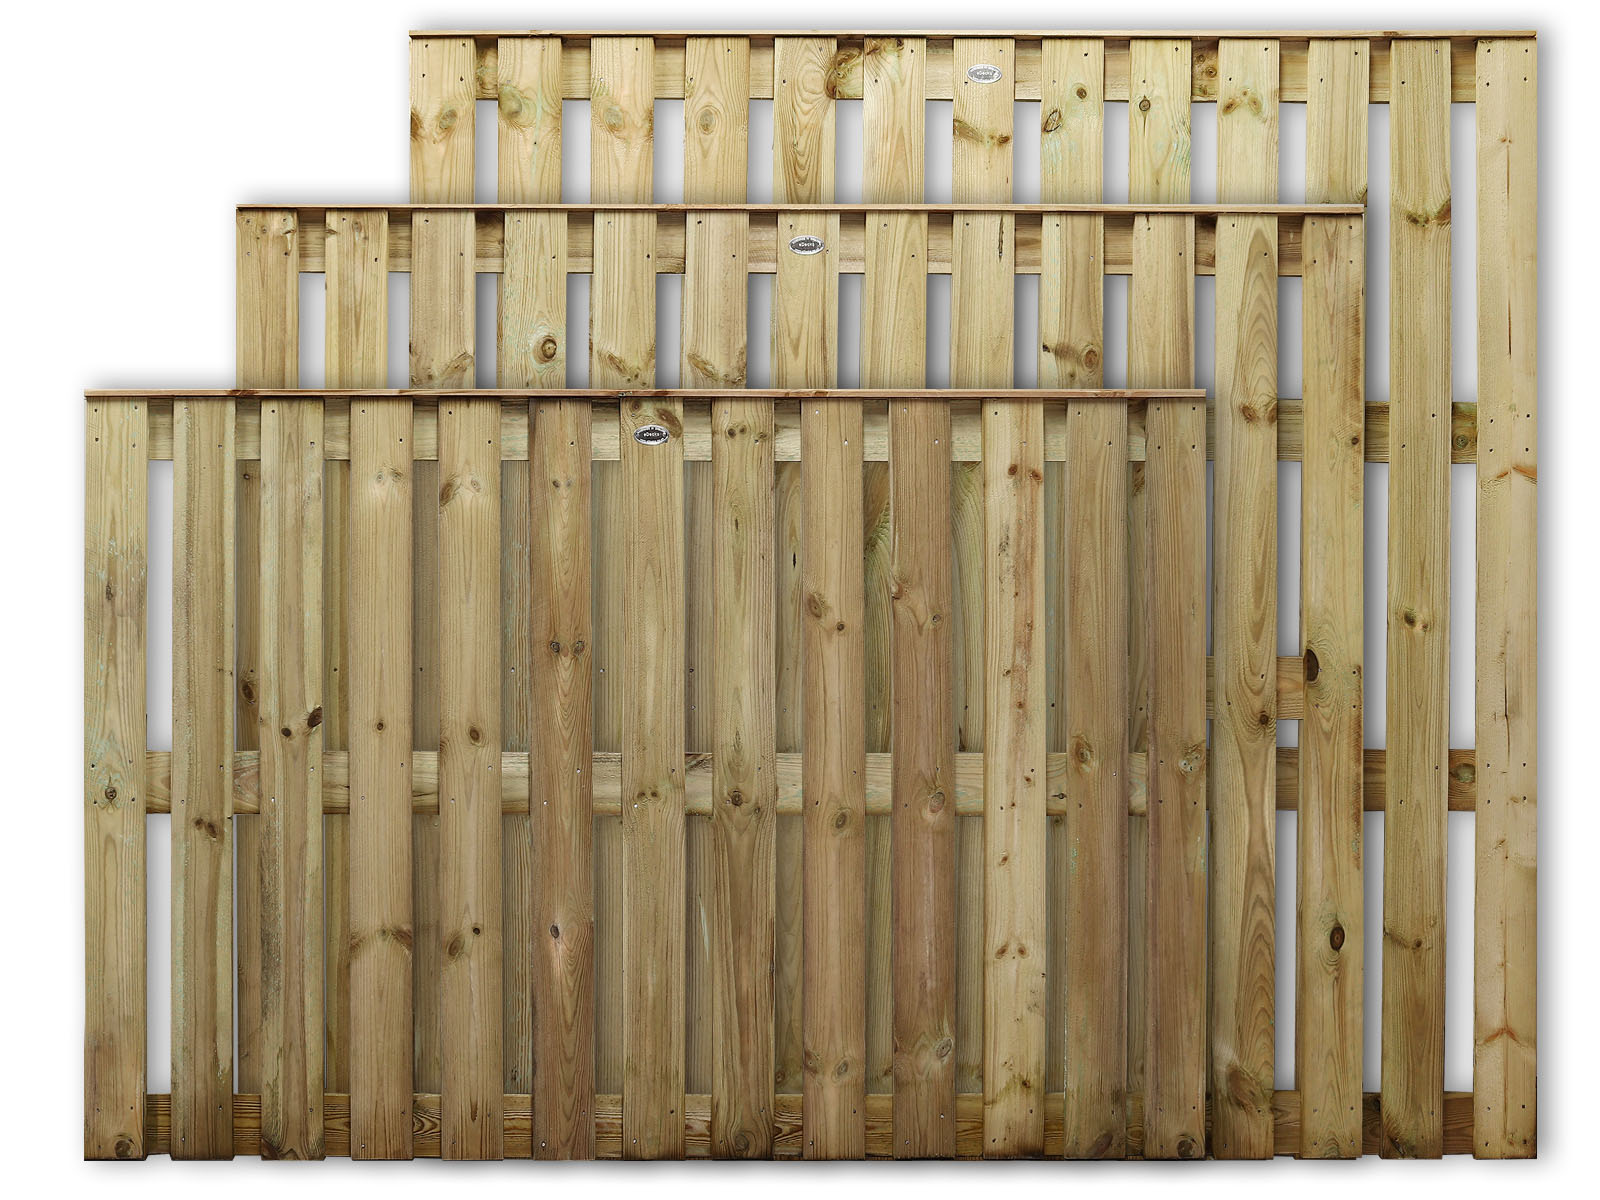 Contemporary Lattice Fence Panels